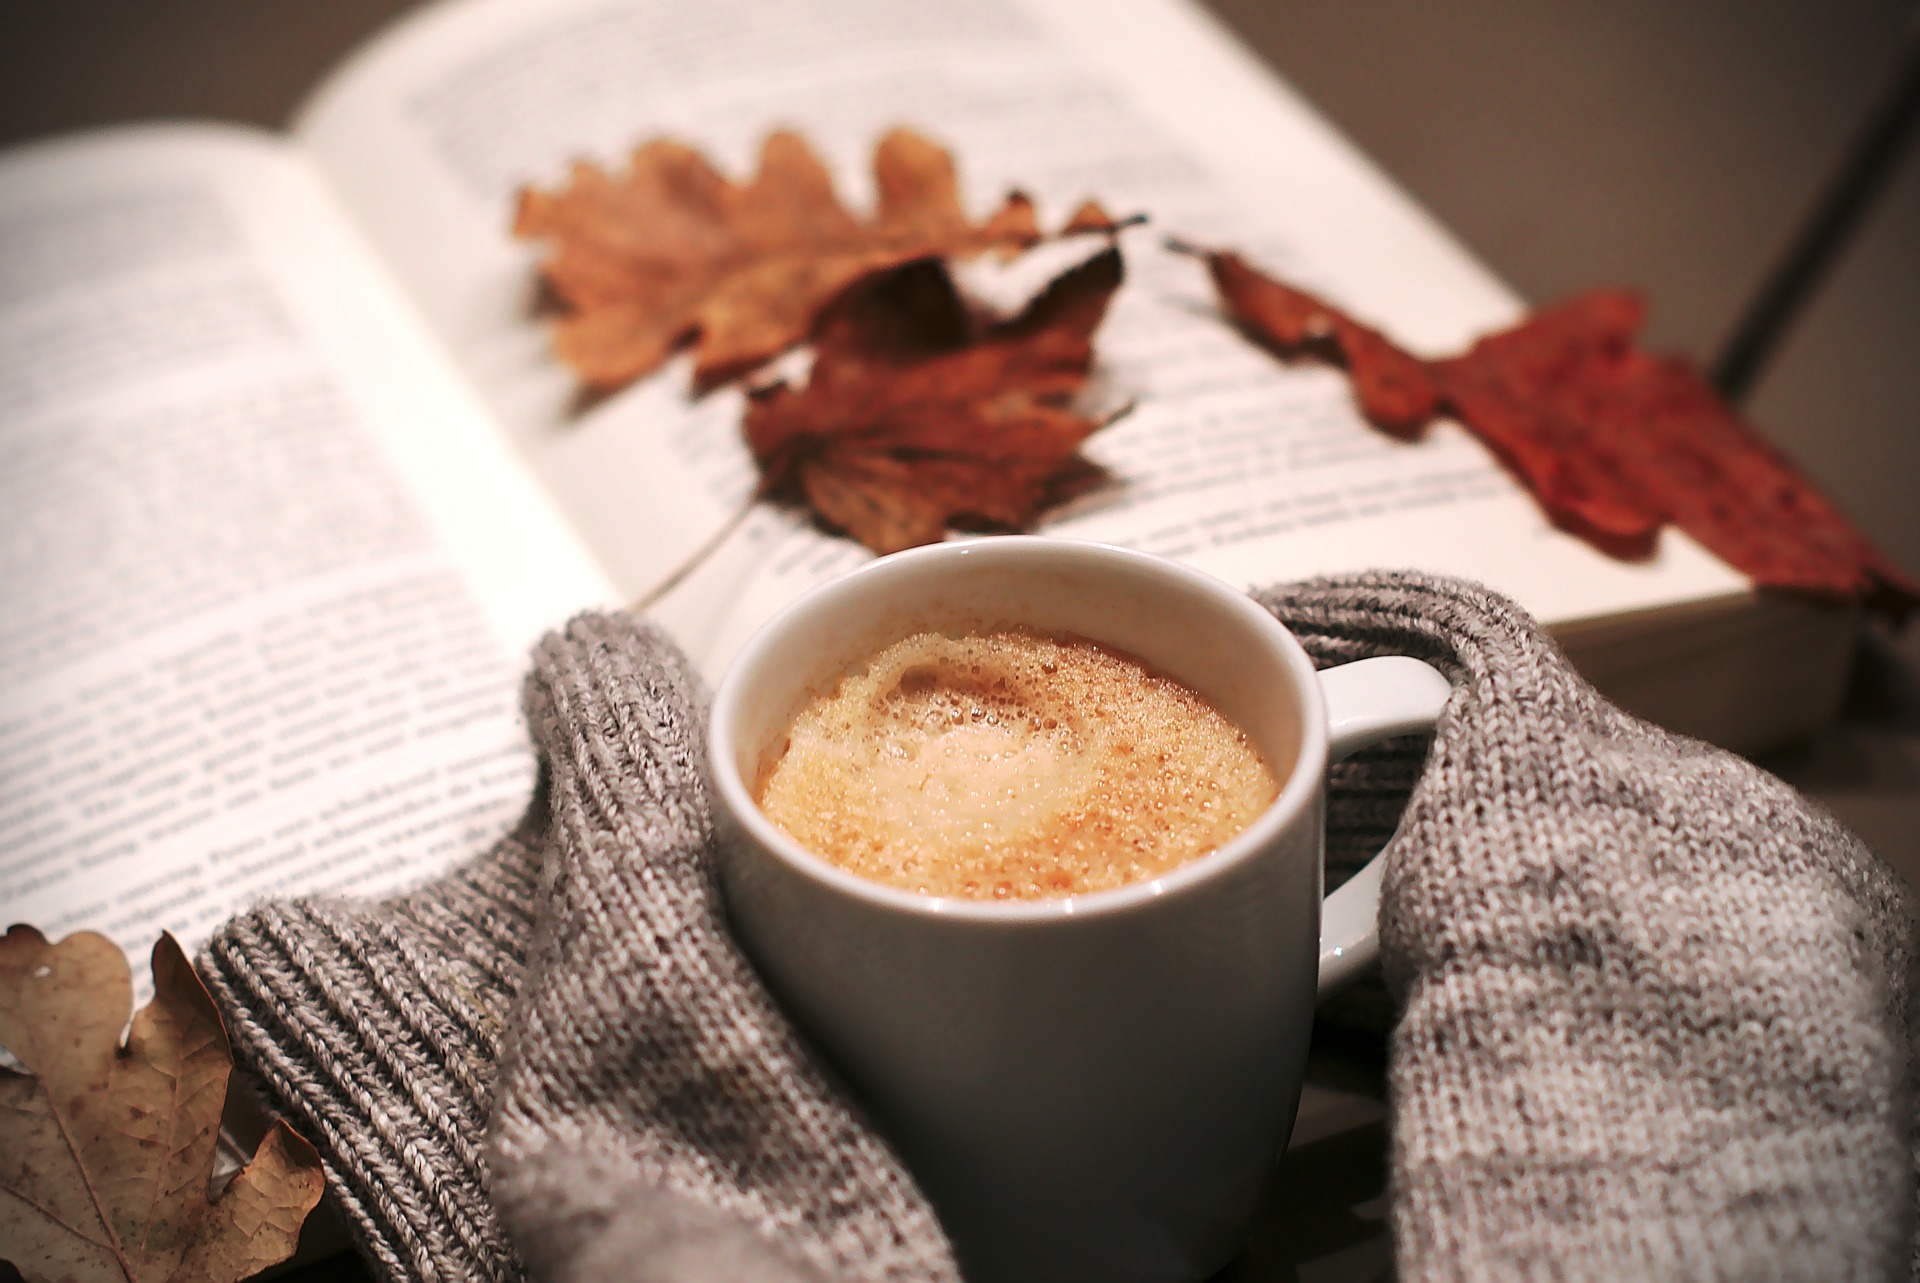 Mug of coffee sitting on an open book held in between hands hidden within sweater sleeves.